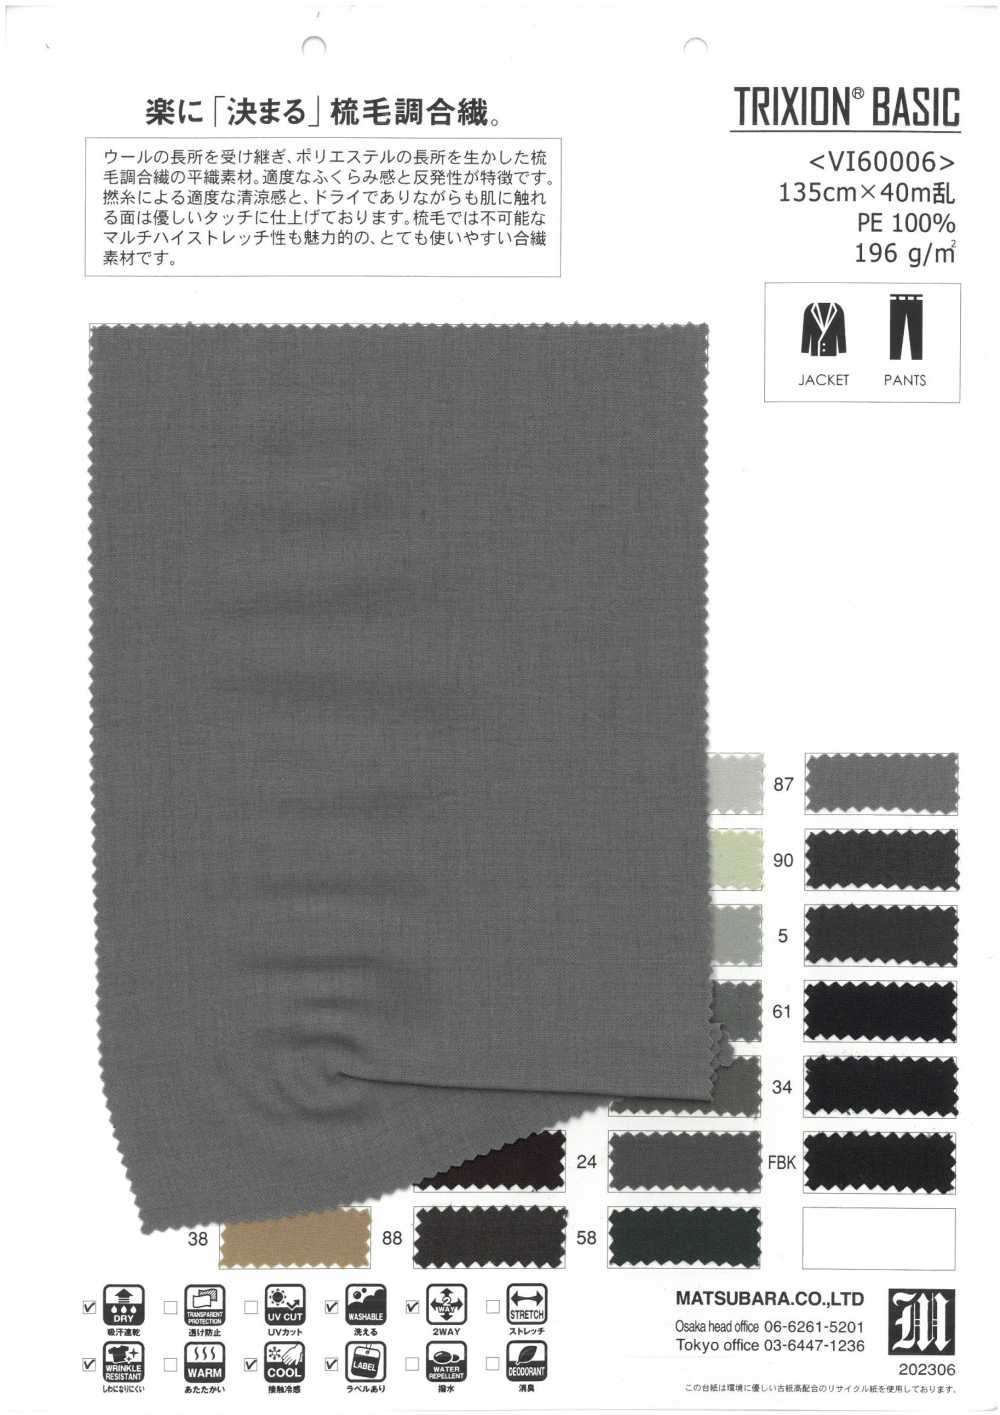 VI60006 TRIXION® BASIC[Textile / Fabric] Matsubara